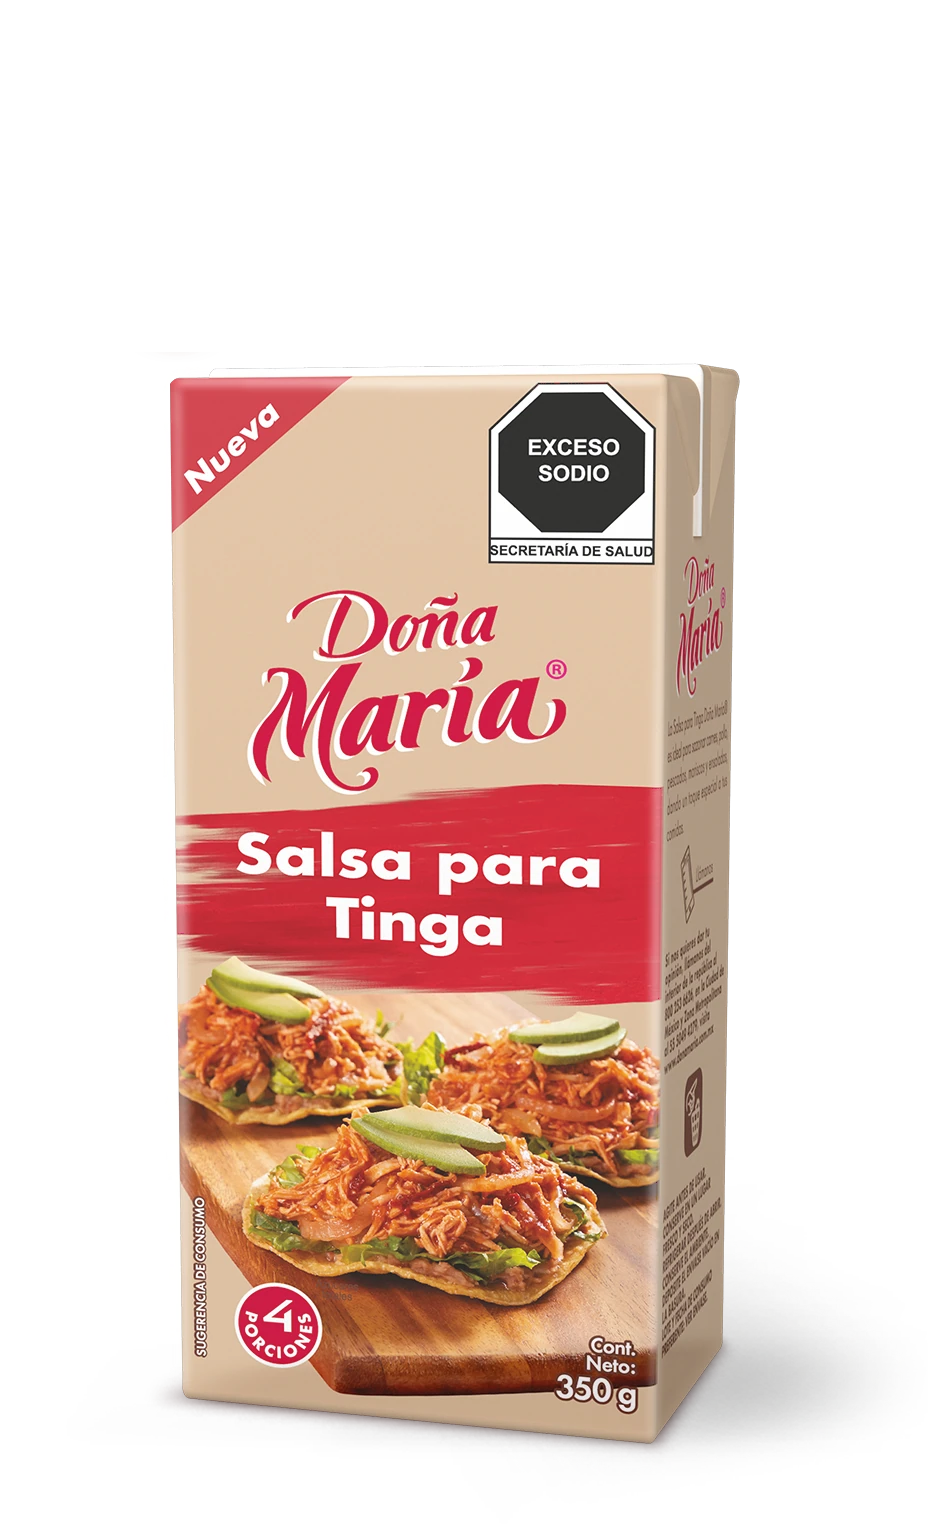 Product Tinga Doña María ®